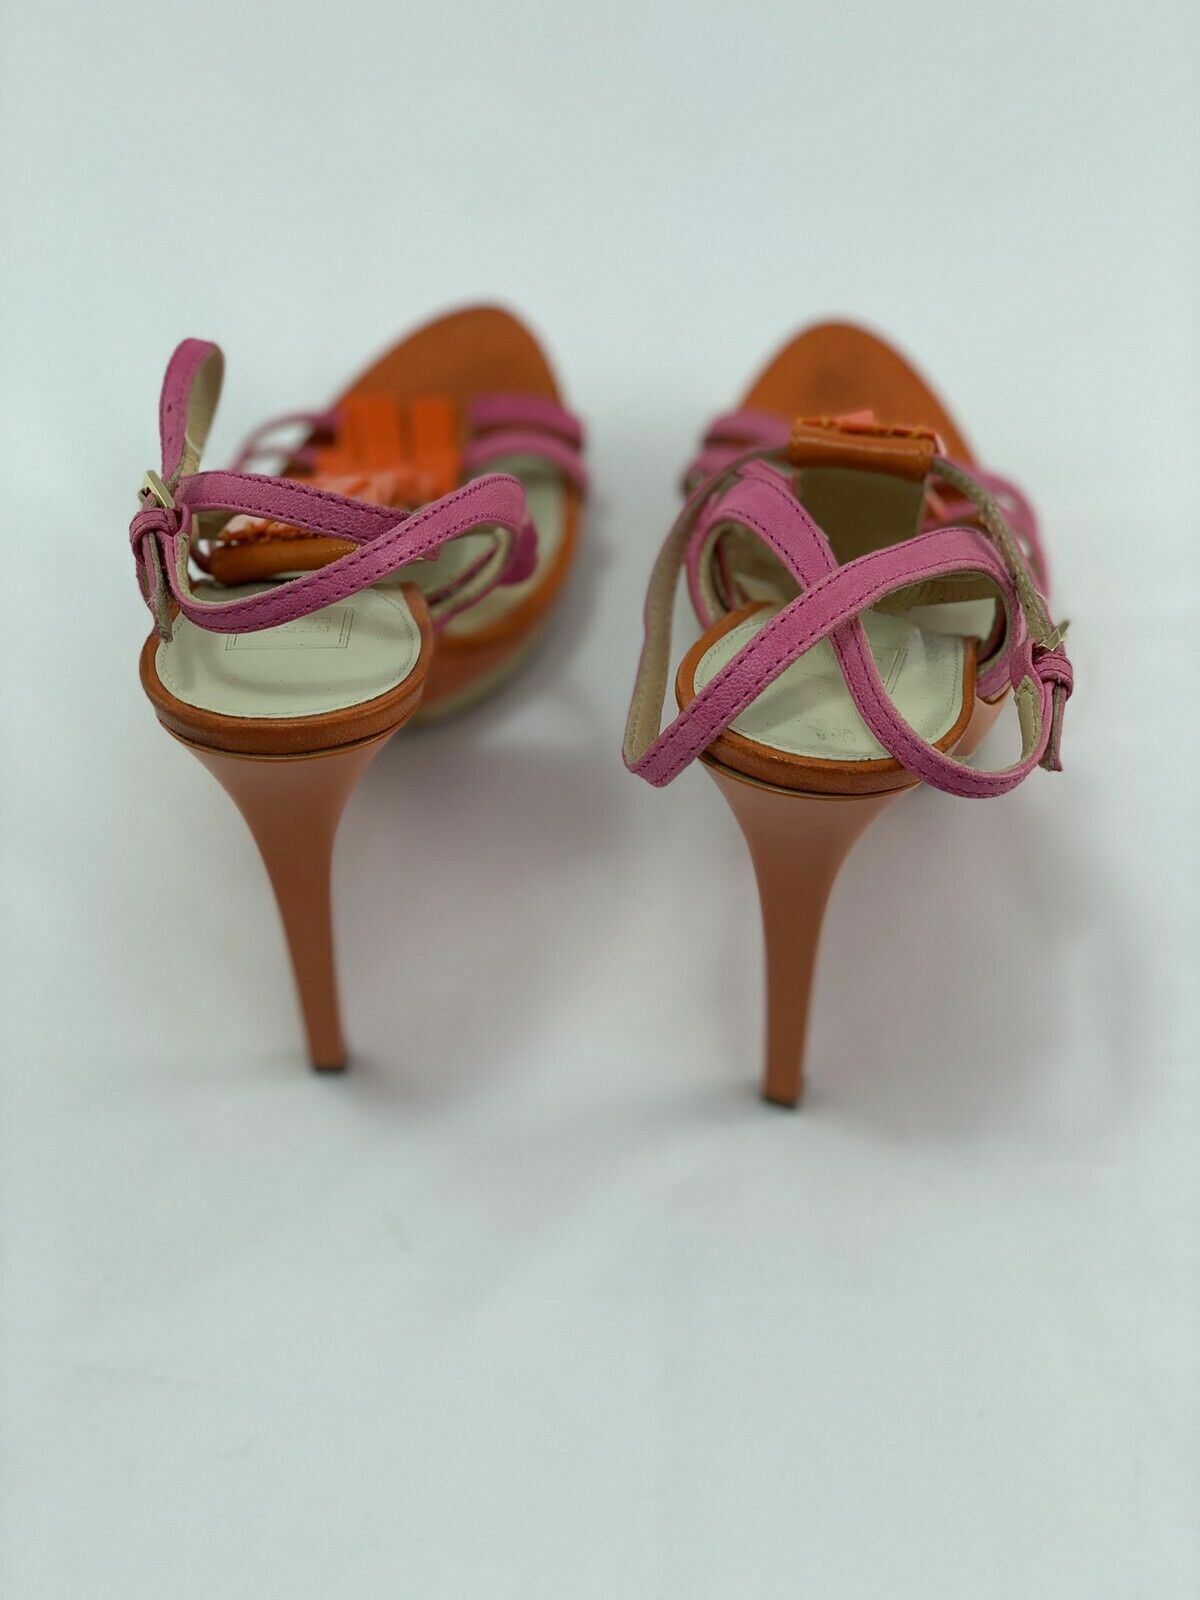 Herve Leger Womens Shoes Orange Pink Stiletto Strappy Sandals Heels size UK 5